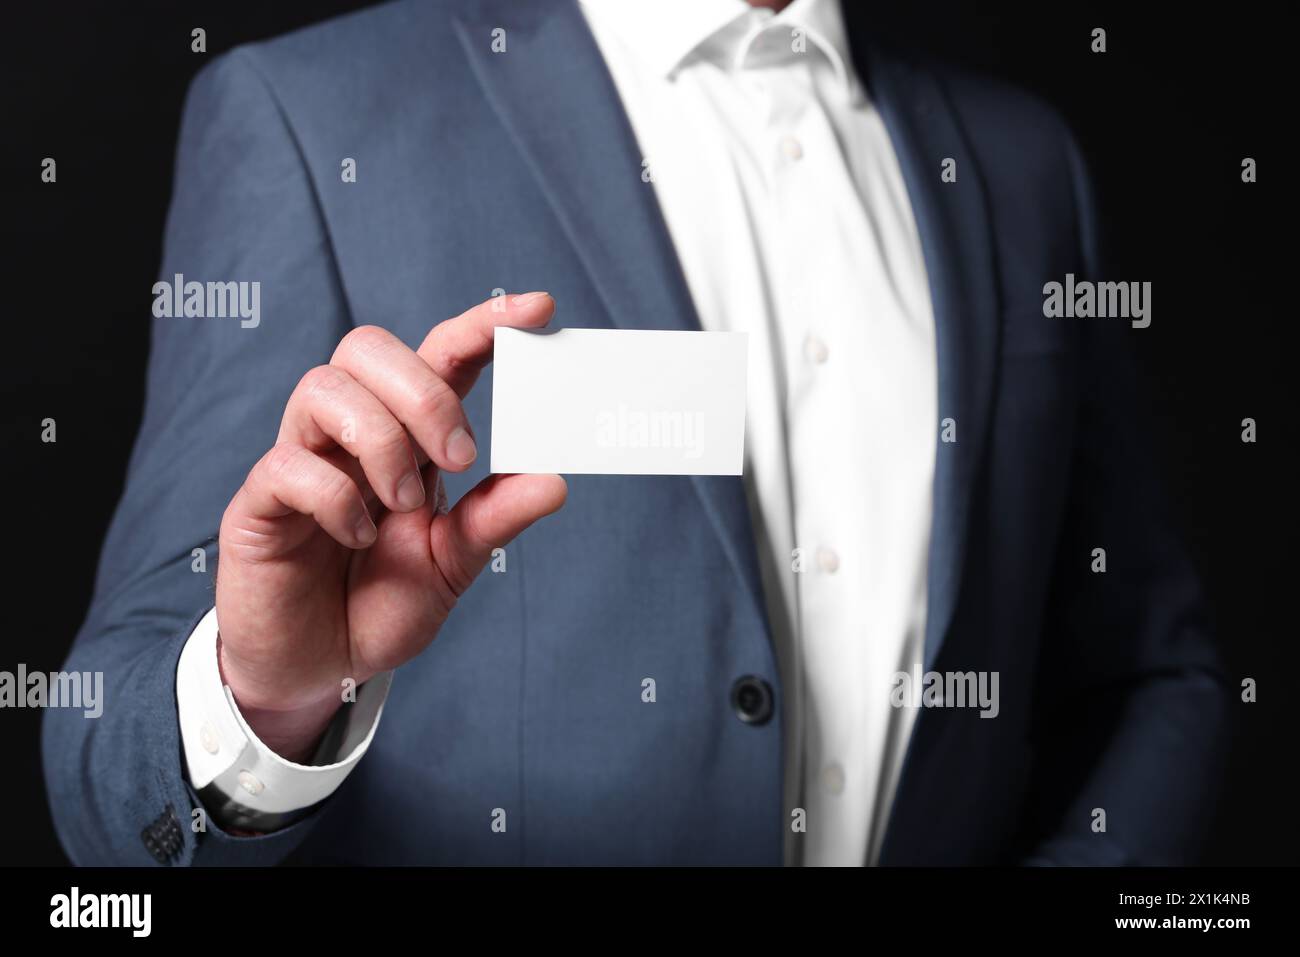 Businessman holding blank business card on black background, closeup Stock Photo